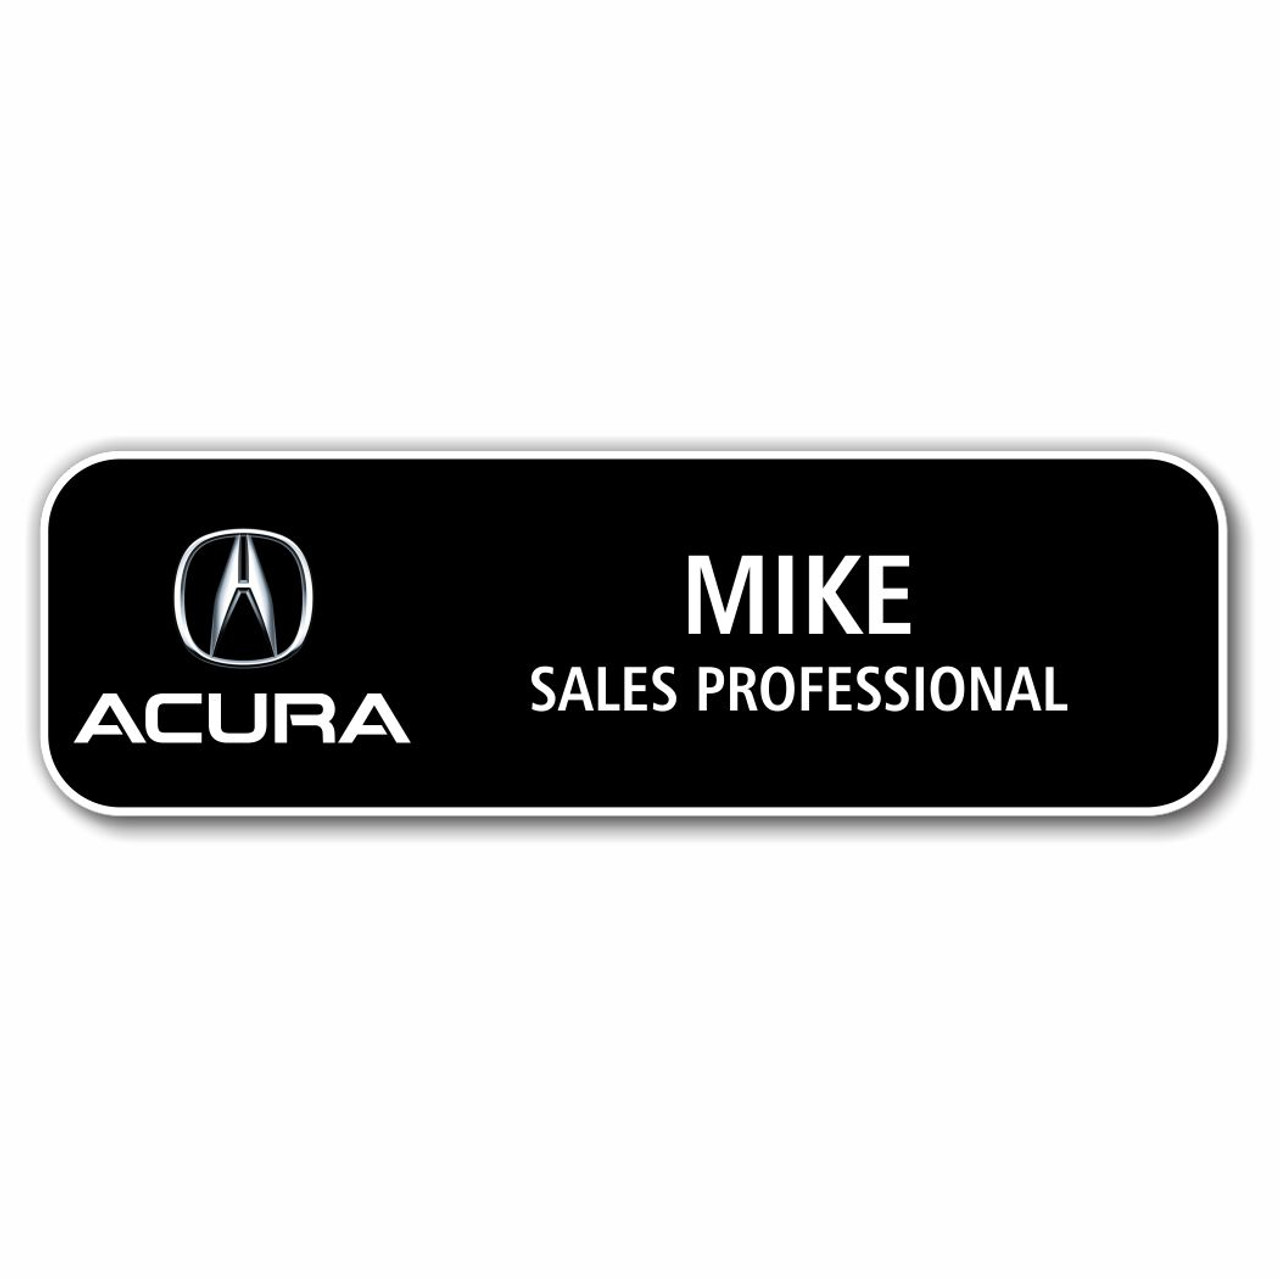 Acura Black 3.25" x 1" Name Badge